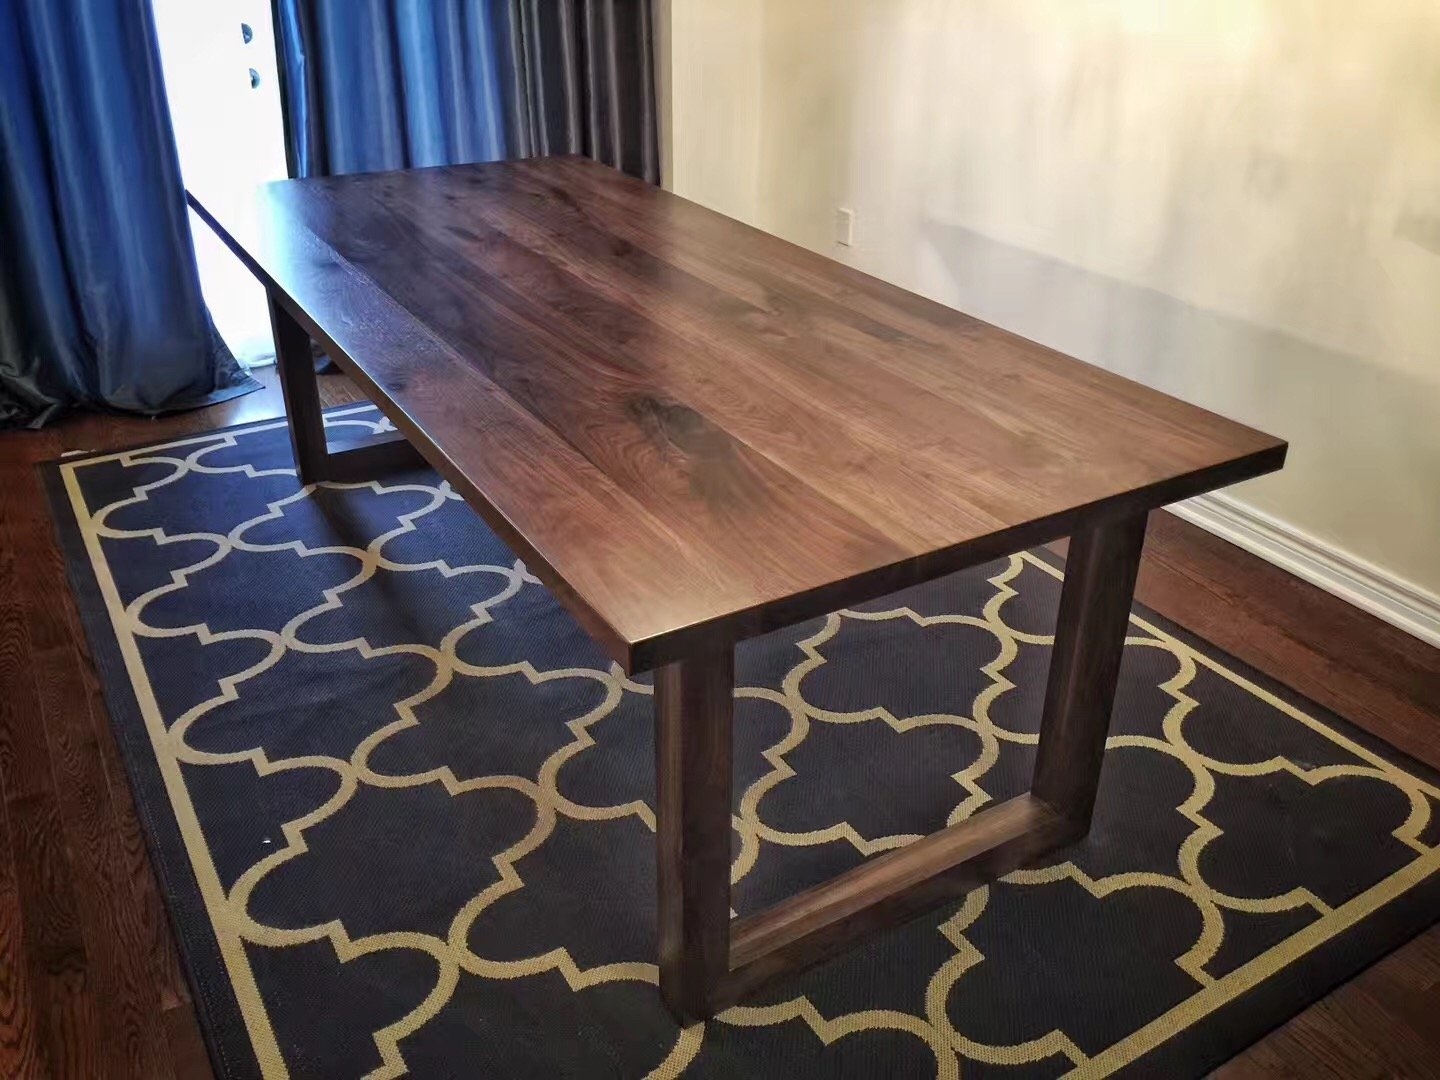 Multi-strip walnut wood slab table